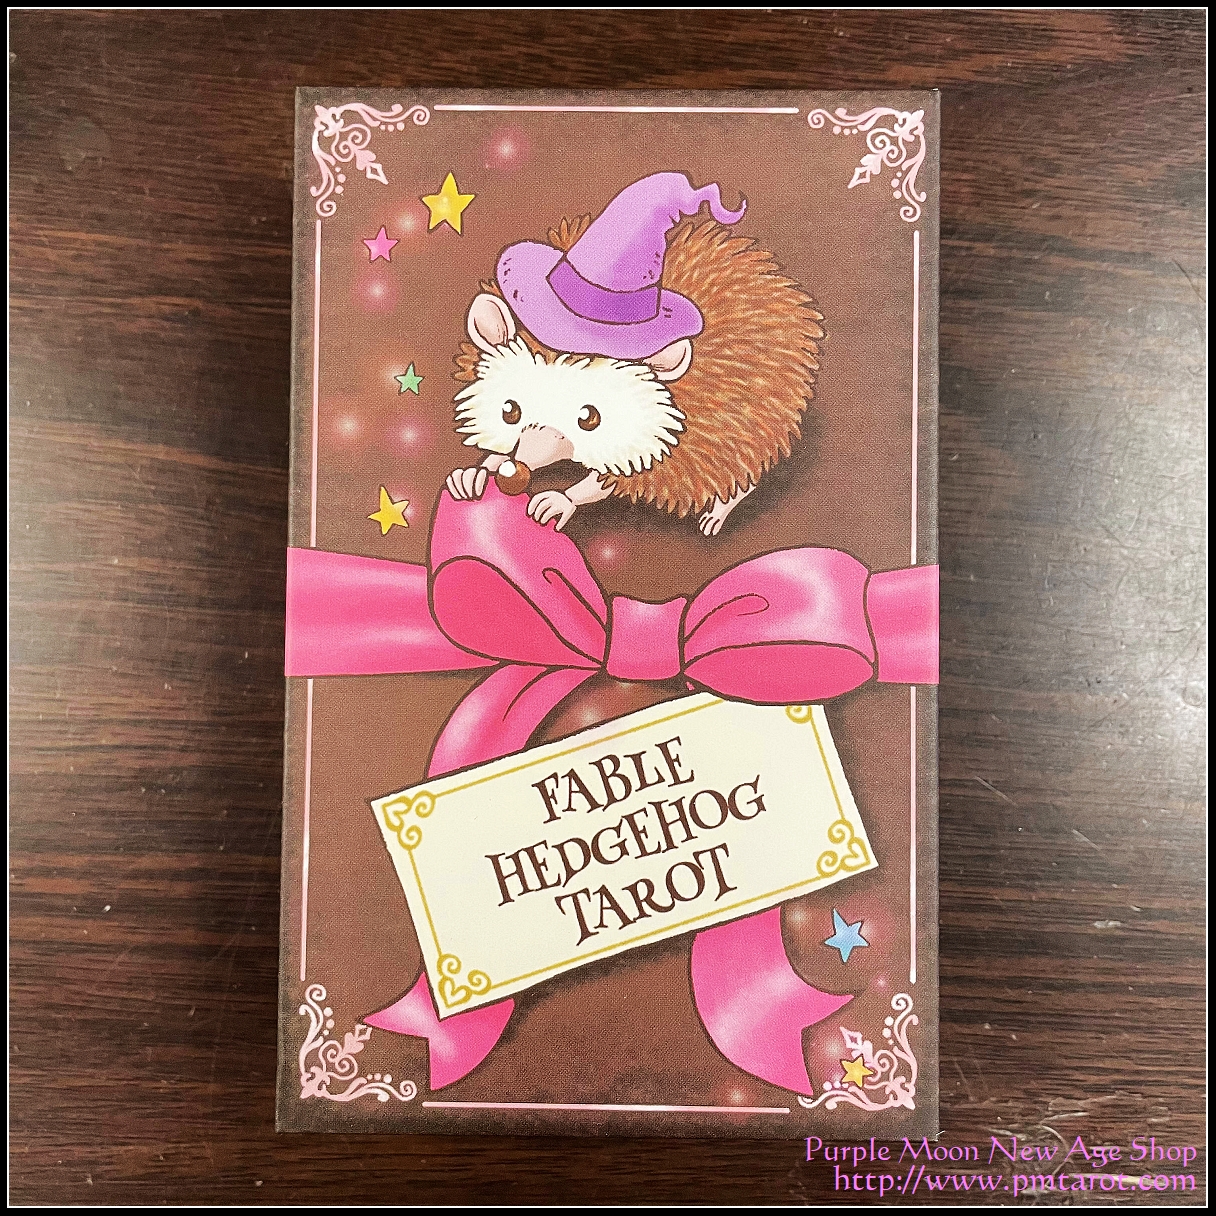 Fable Hedgehog Tarot